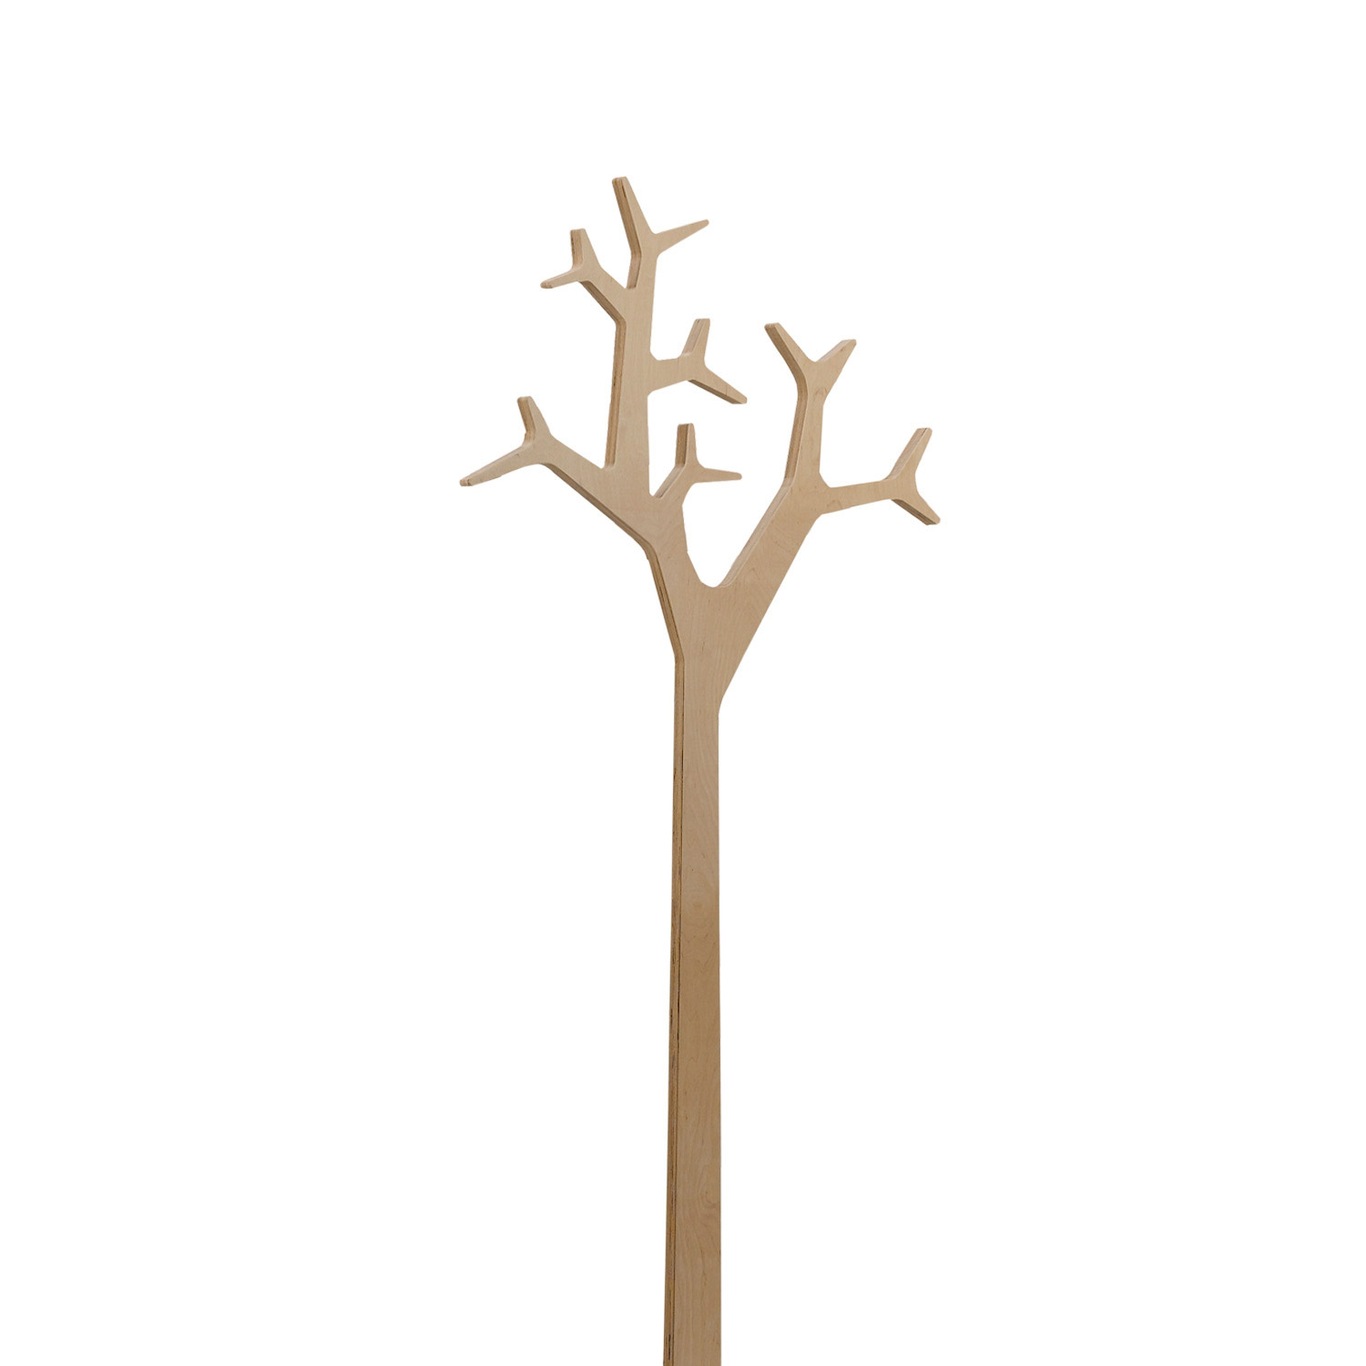 Tree Klädhängare Väggmonterad 134 cm, Ek